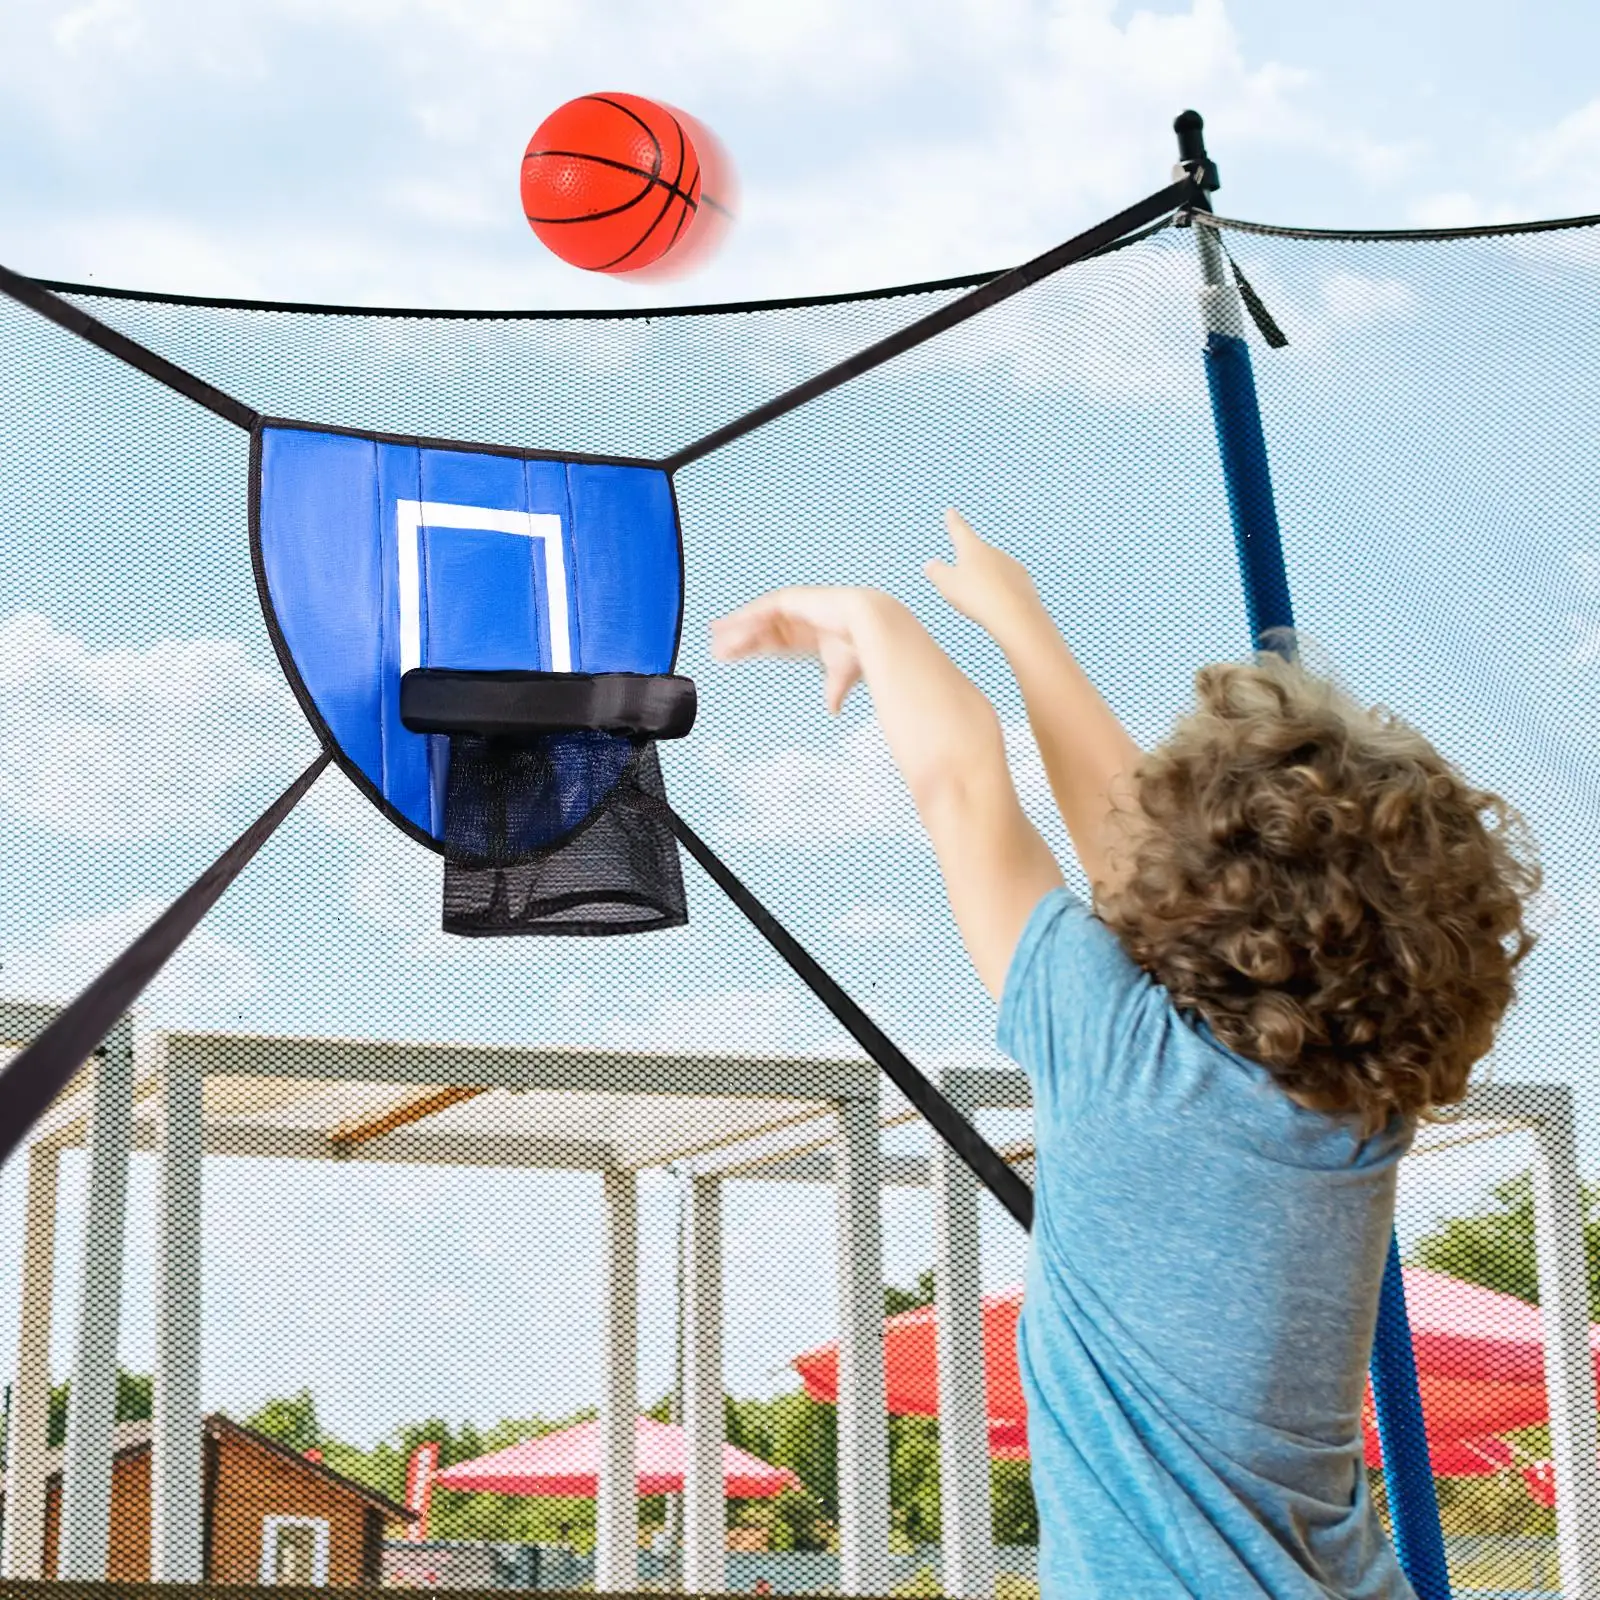 Trampoline Basketball Hoop Basketball Goal Outdoor Sports Toys Sturdy Garden Easy Installation Basketball Rack for Kids Children